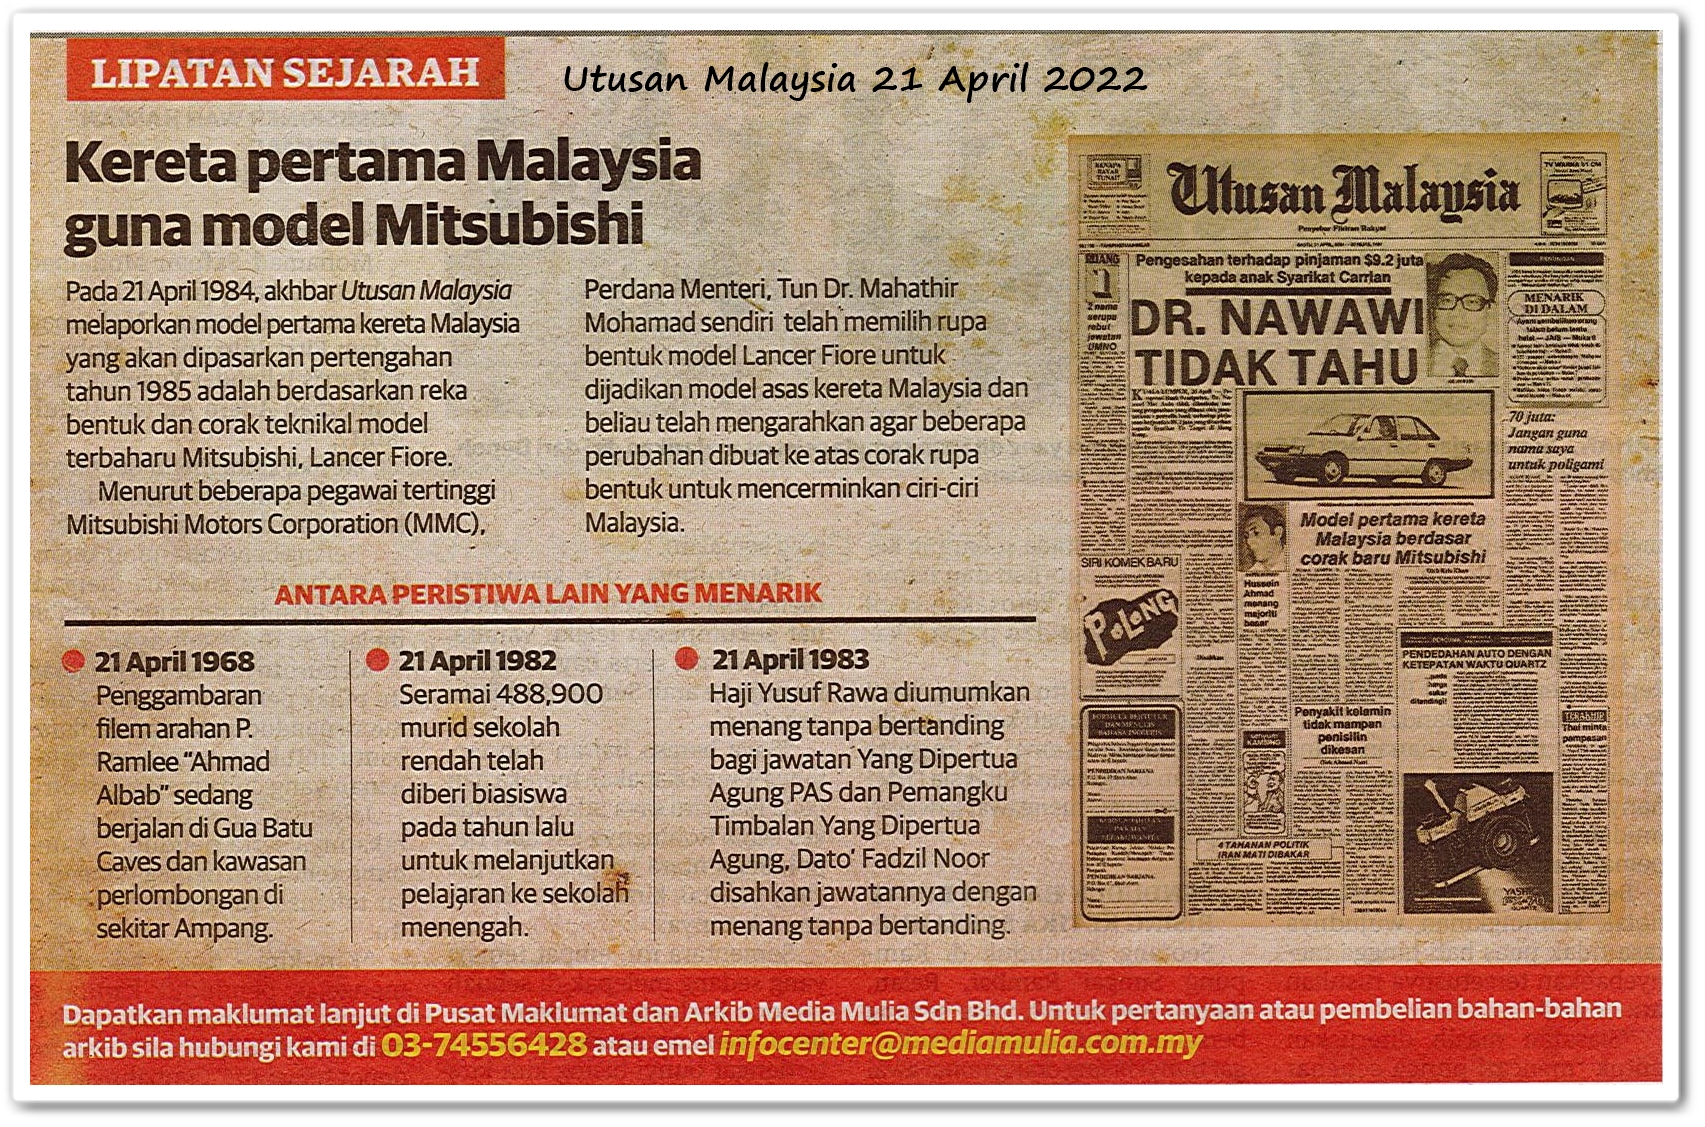 Lipatan sejarah 21 April - Keratan akhbar Utusan Malaysia 21 April 2022